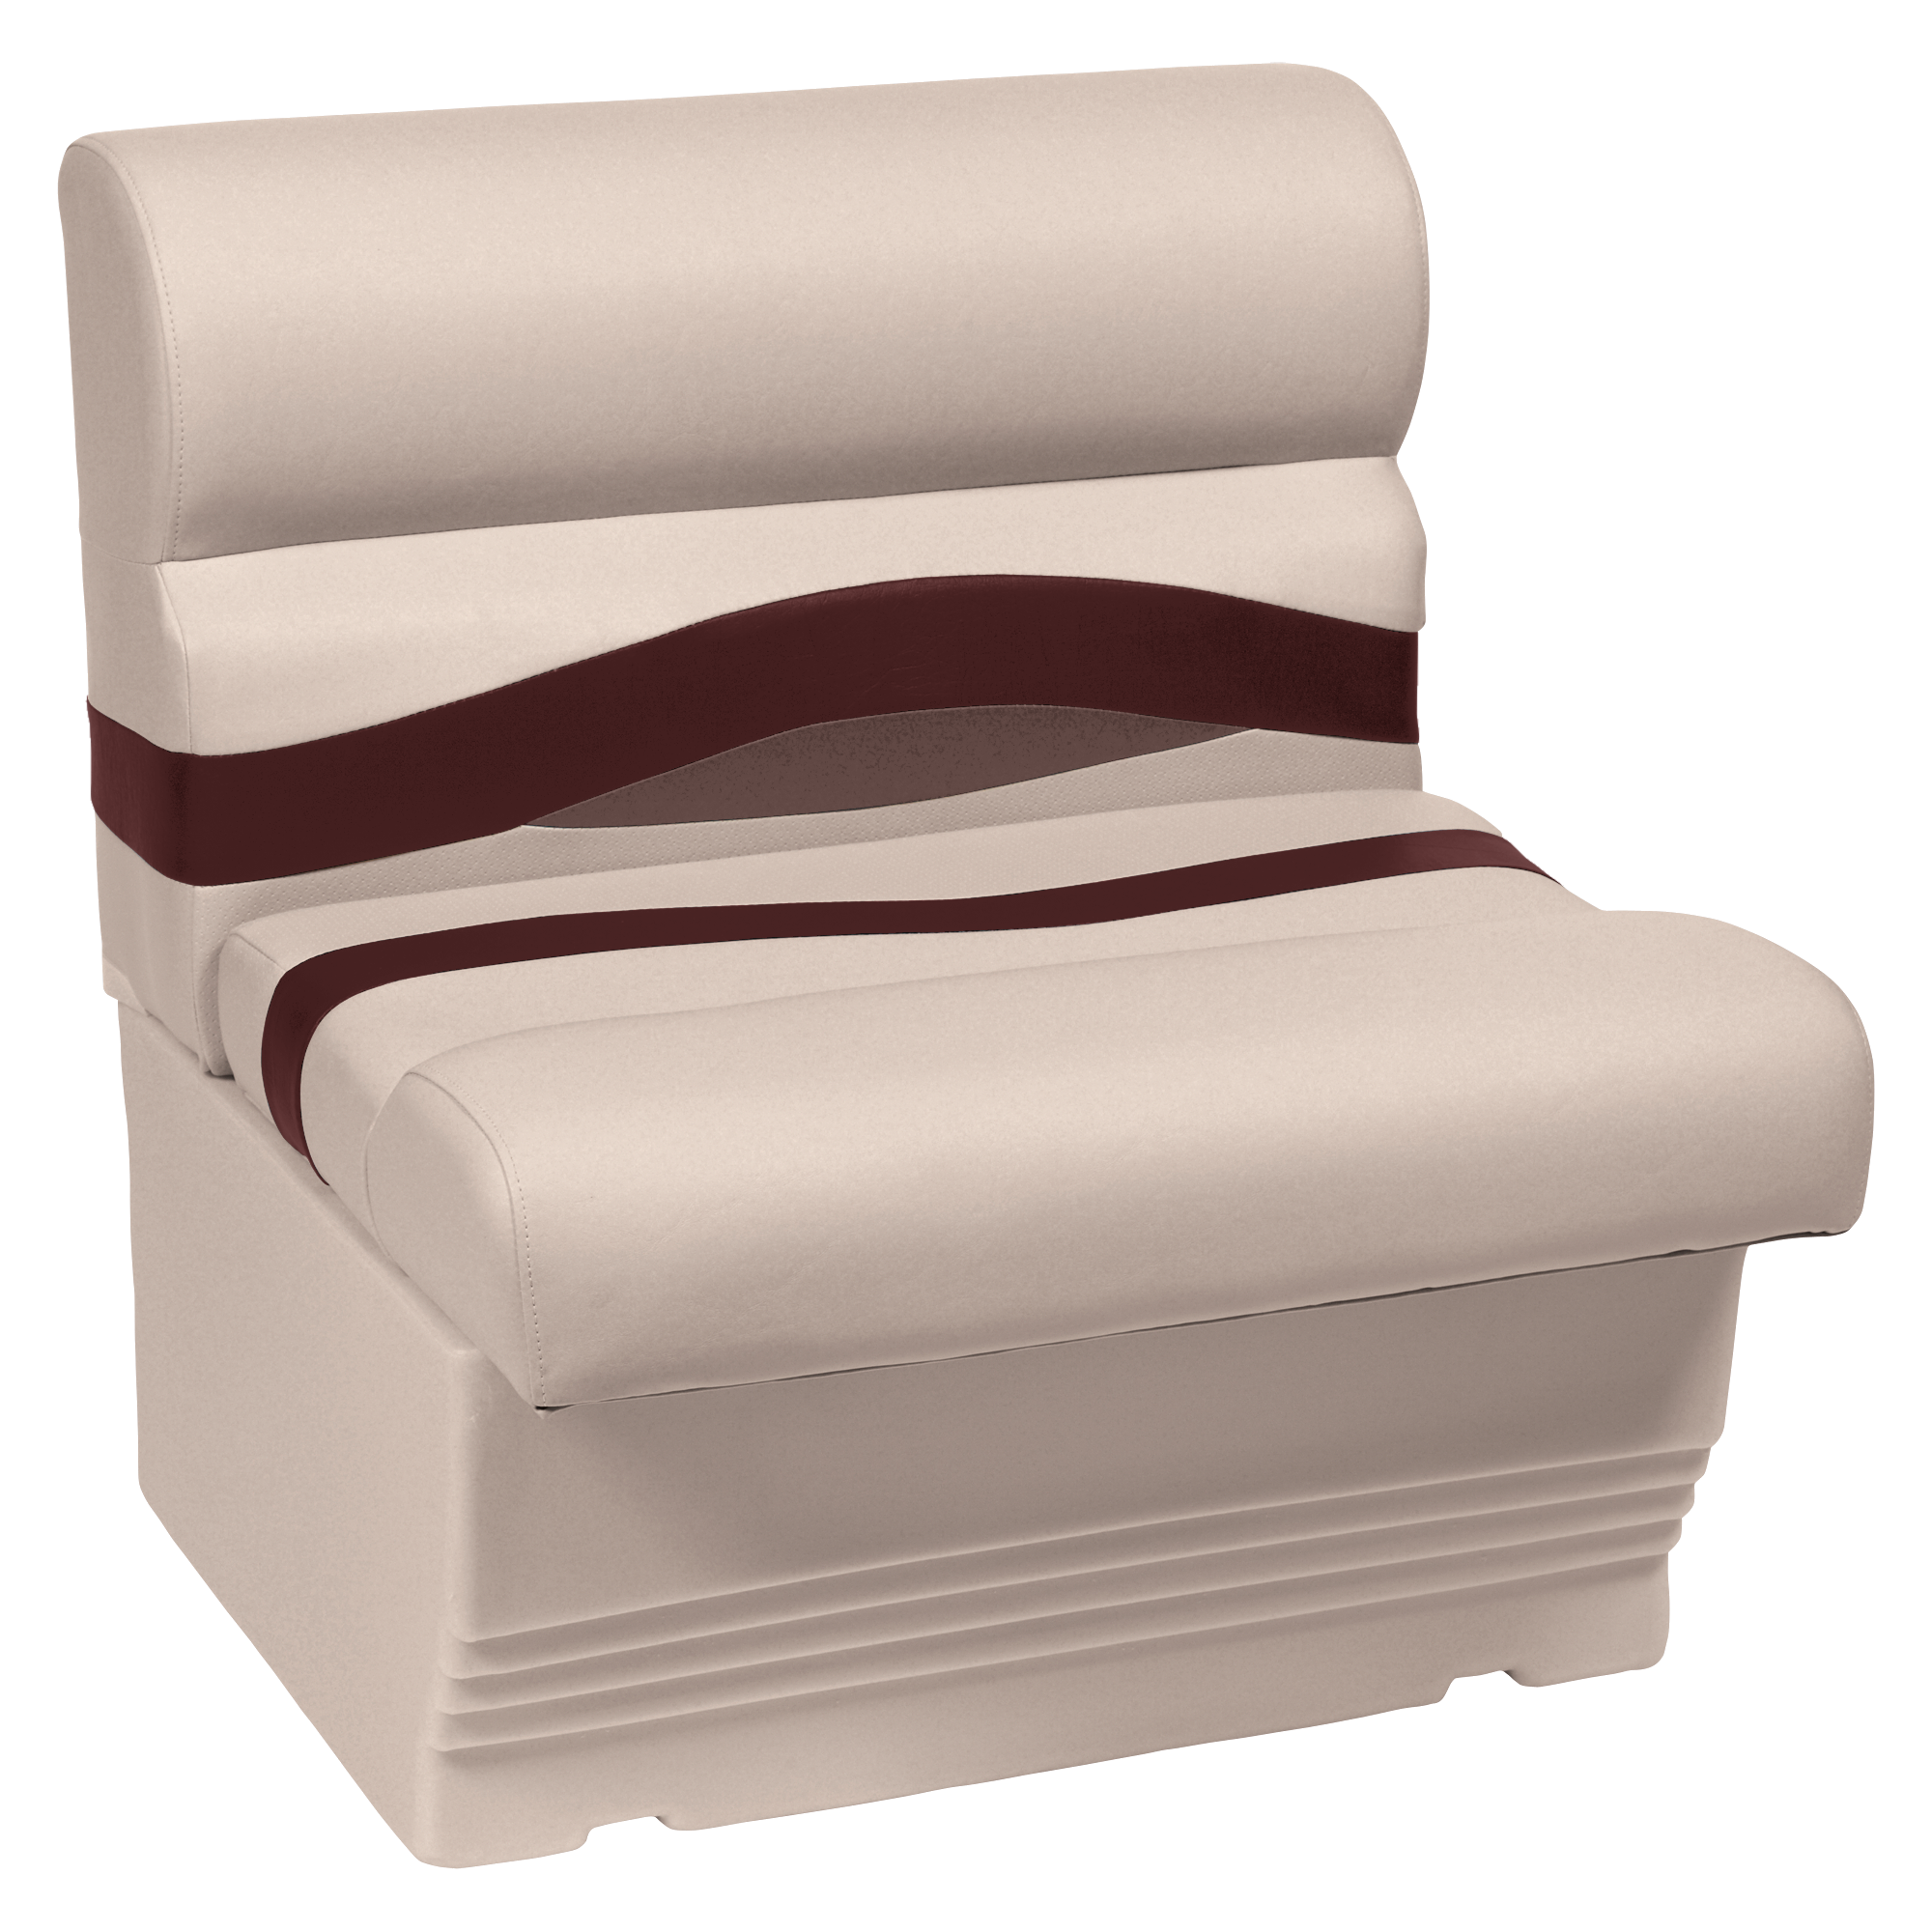 Wise Premier Series Pontoon Furniture 27"" Bench Seat with Base - Platinum/Wine/Manatee